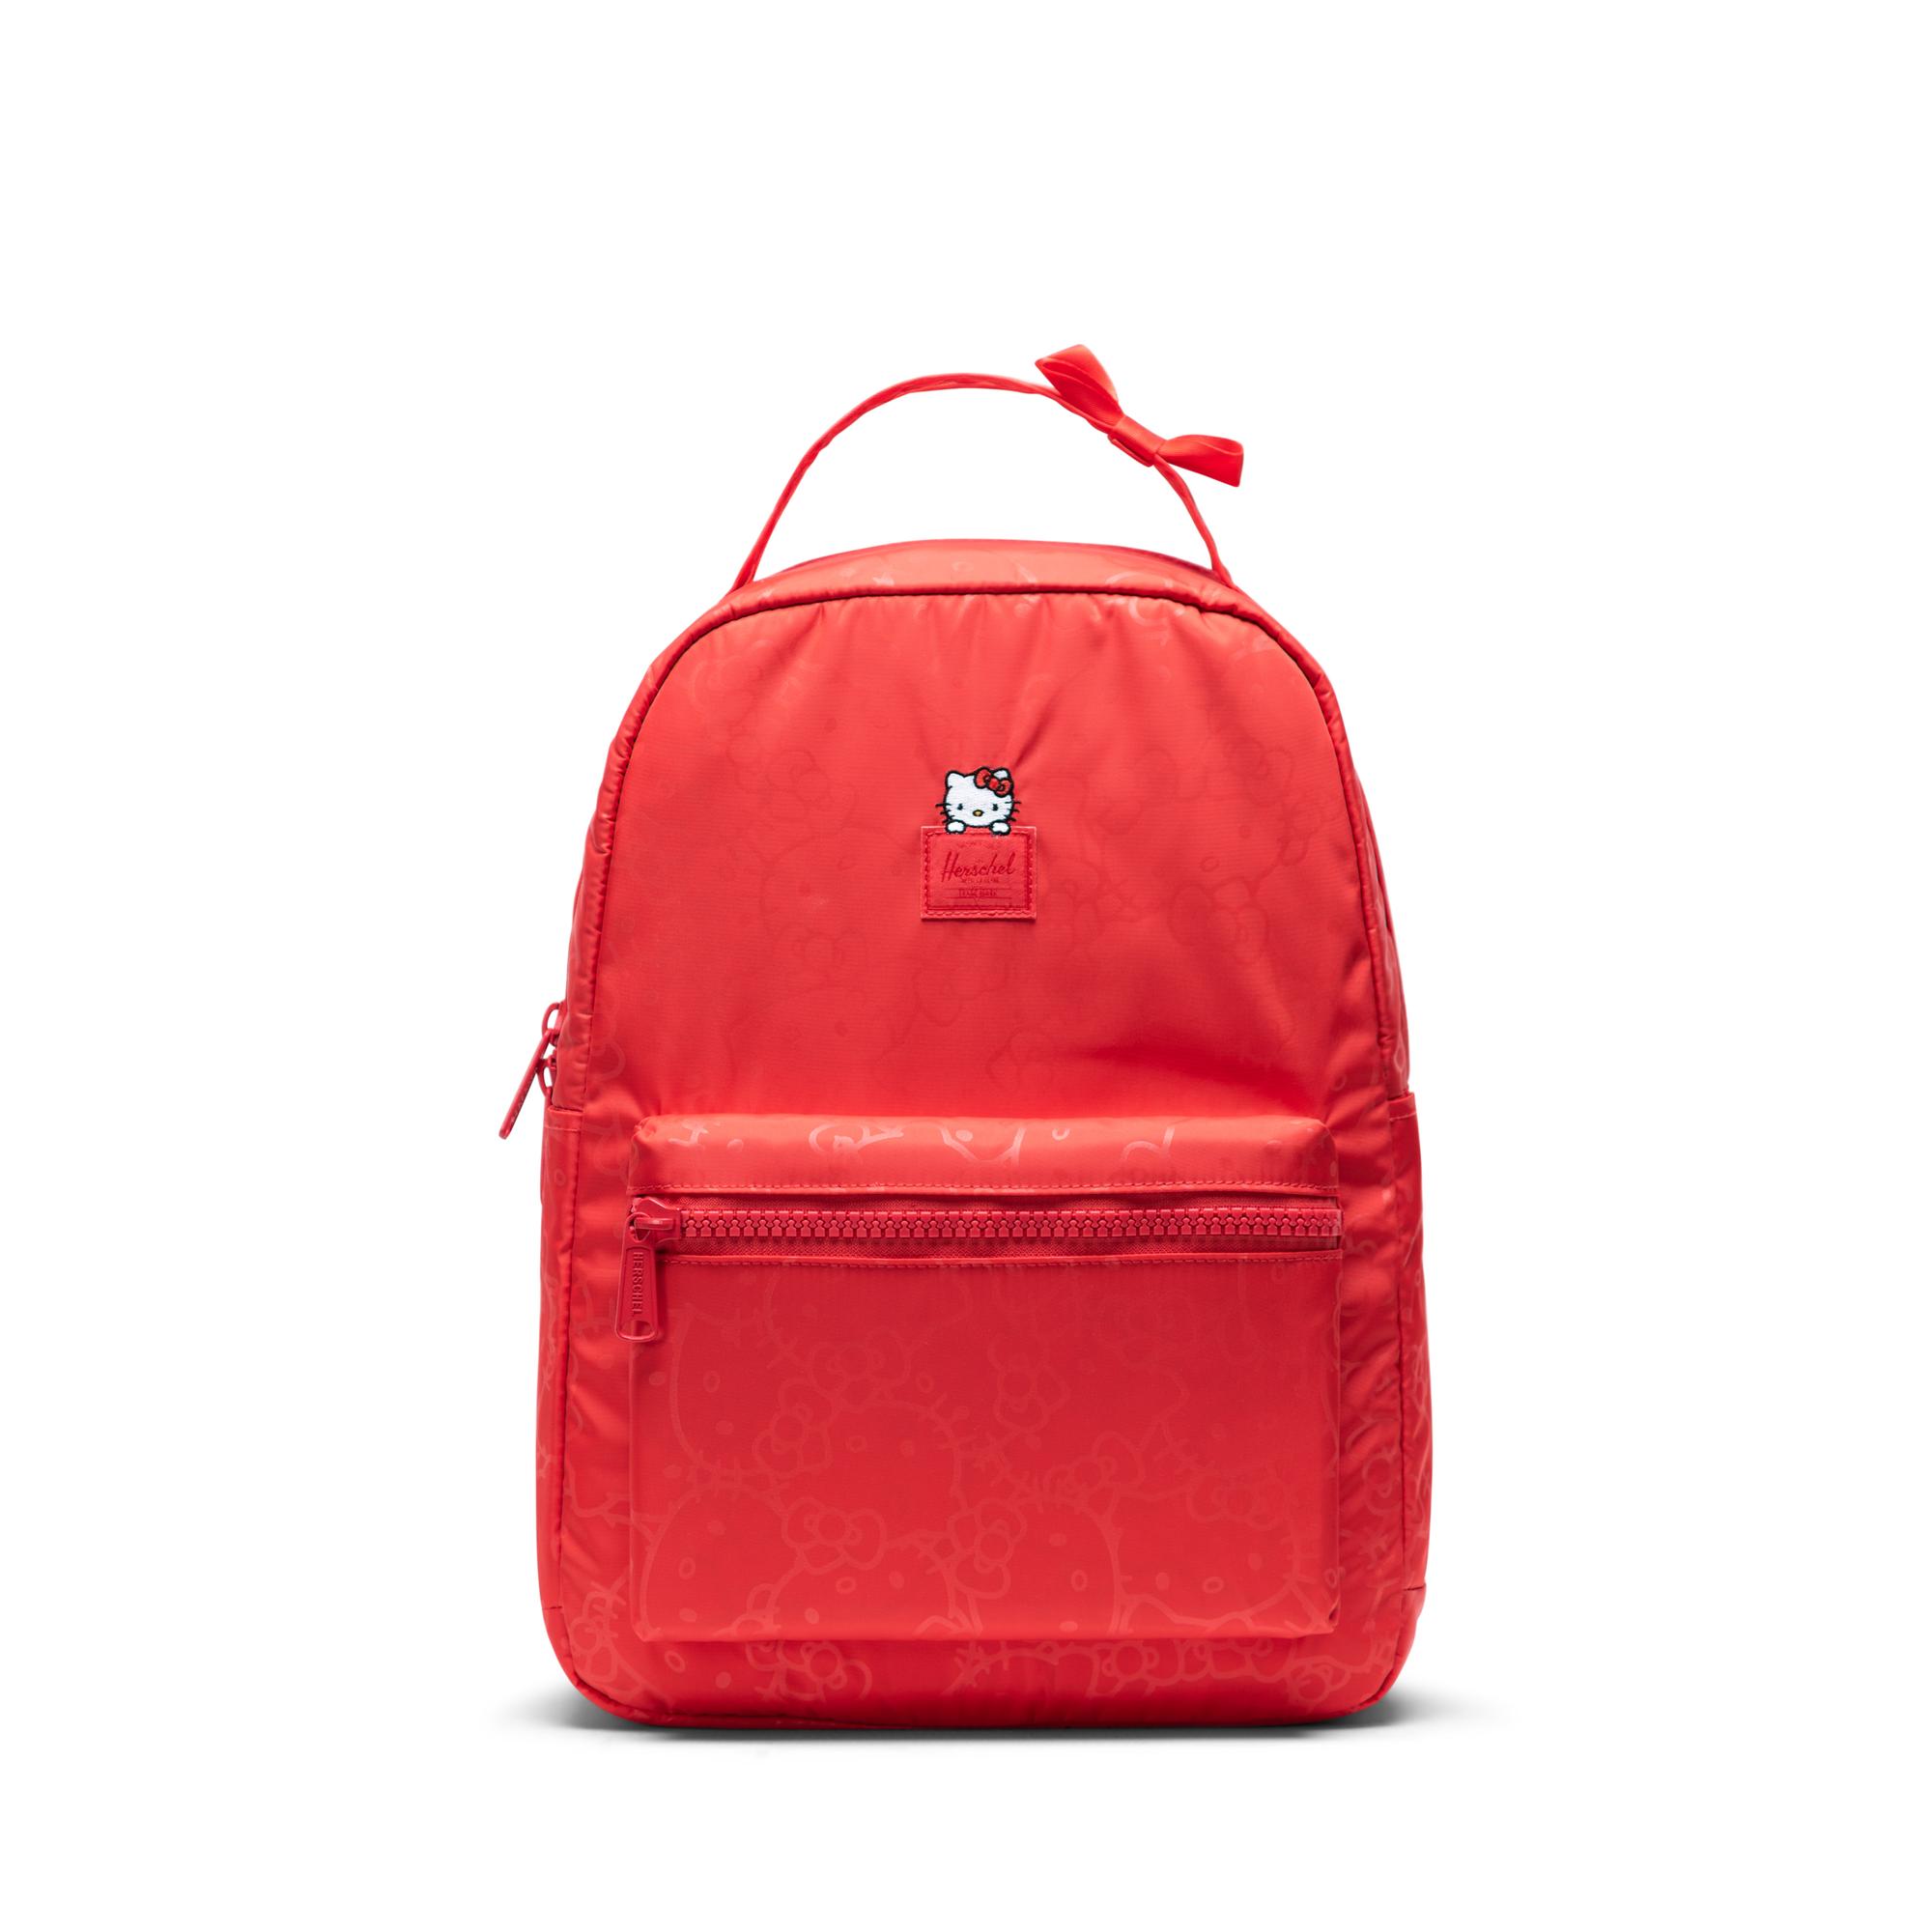 NWT Herschel Supply Co Hello Kitty Sanrio Nova Mid-Volume Backpack Red New Med 